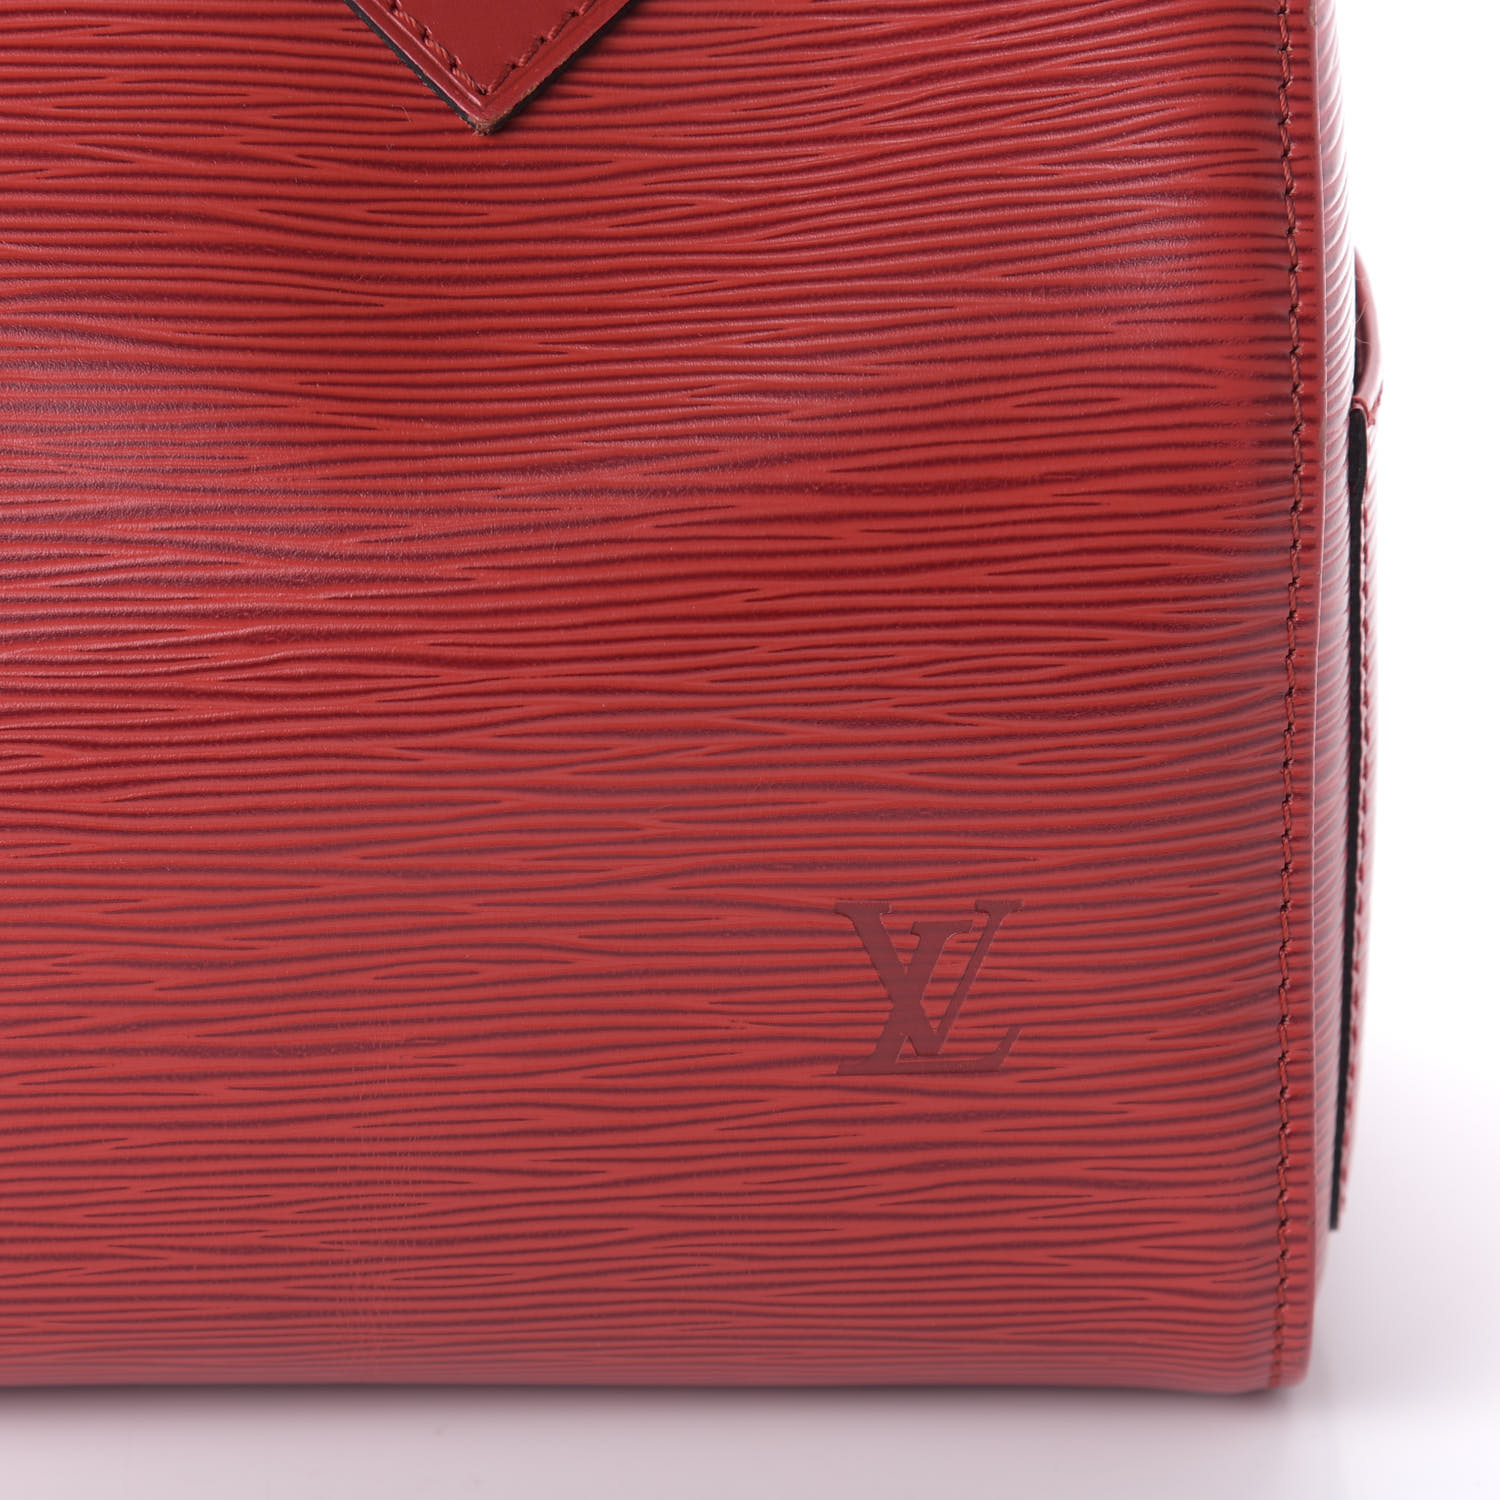 AUTHENTIC Louis Vuitton Speedy 25 Epi Castillan Red PREOWNED